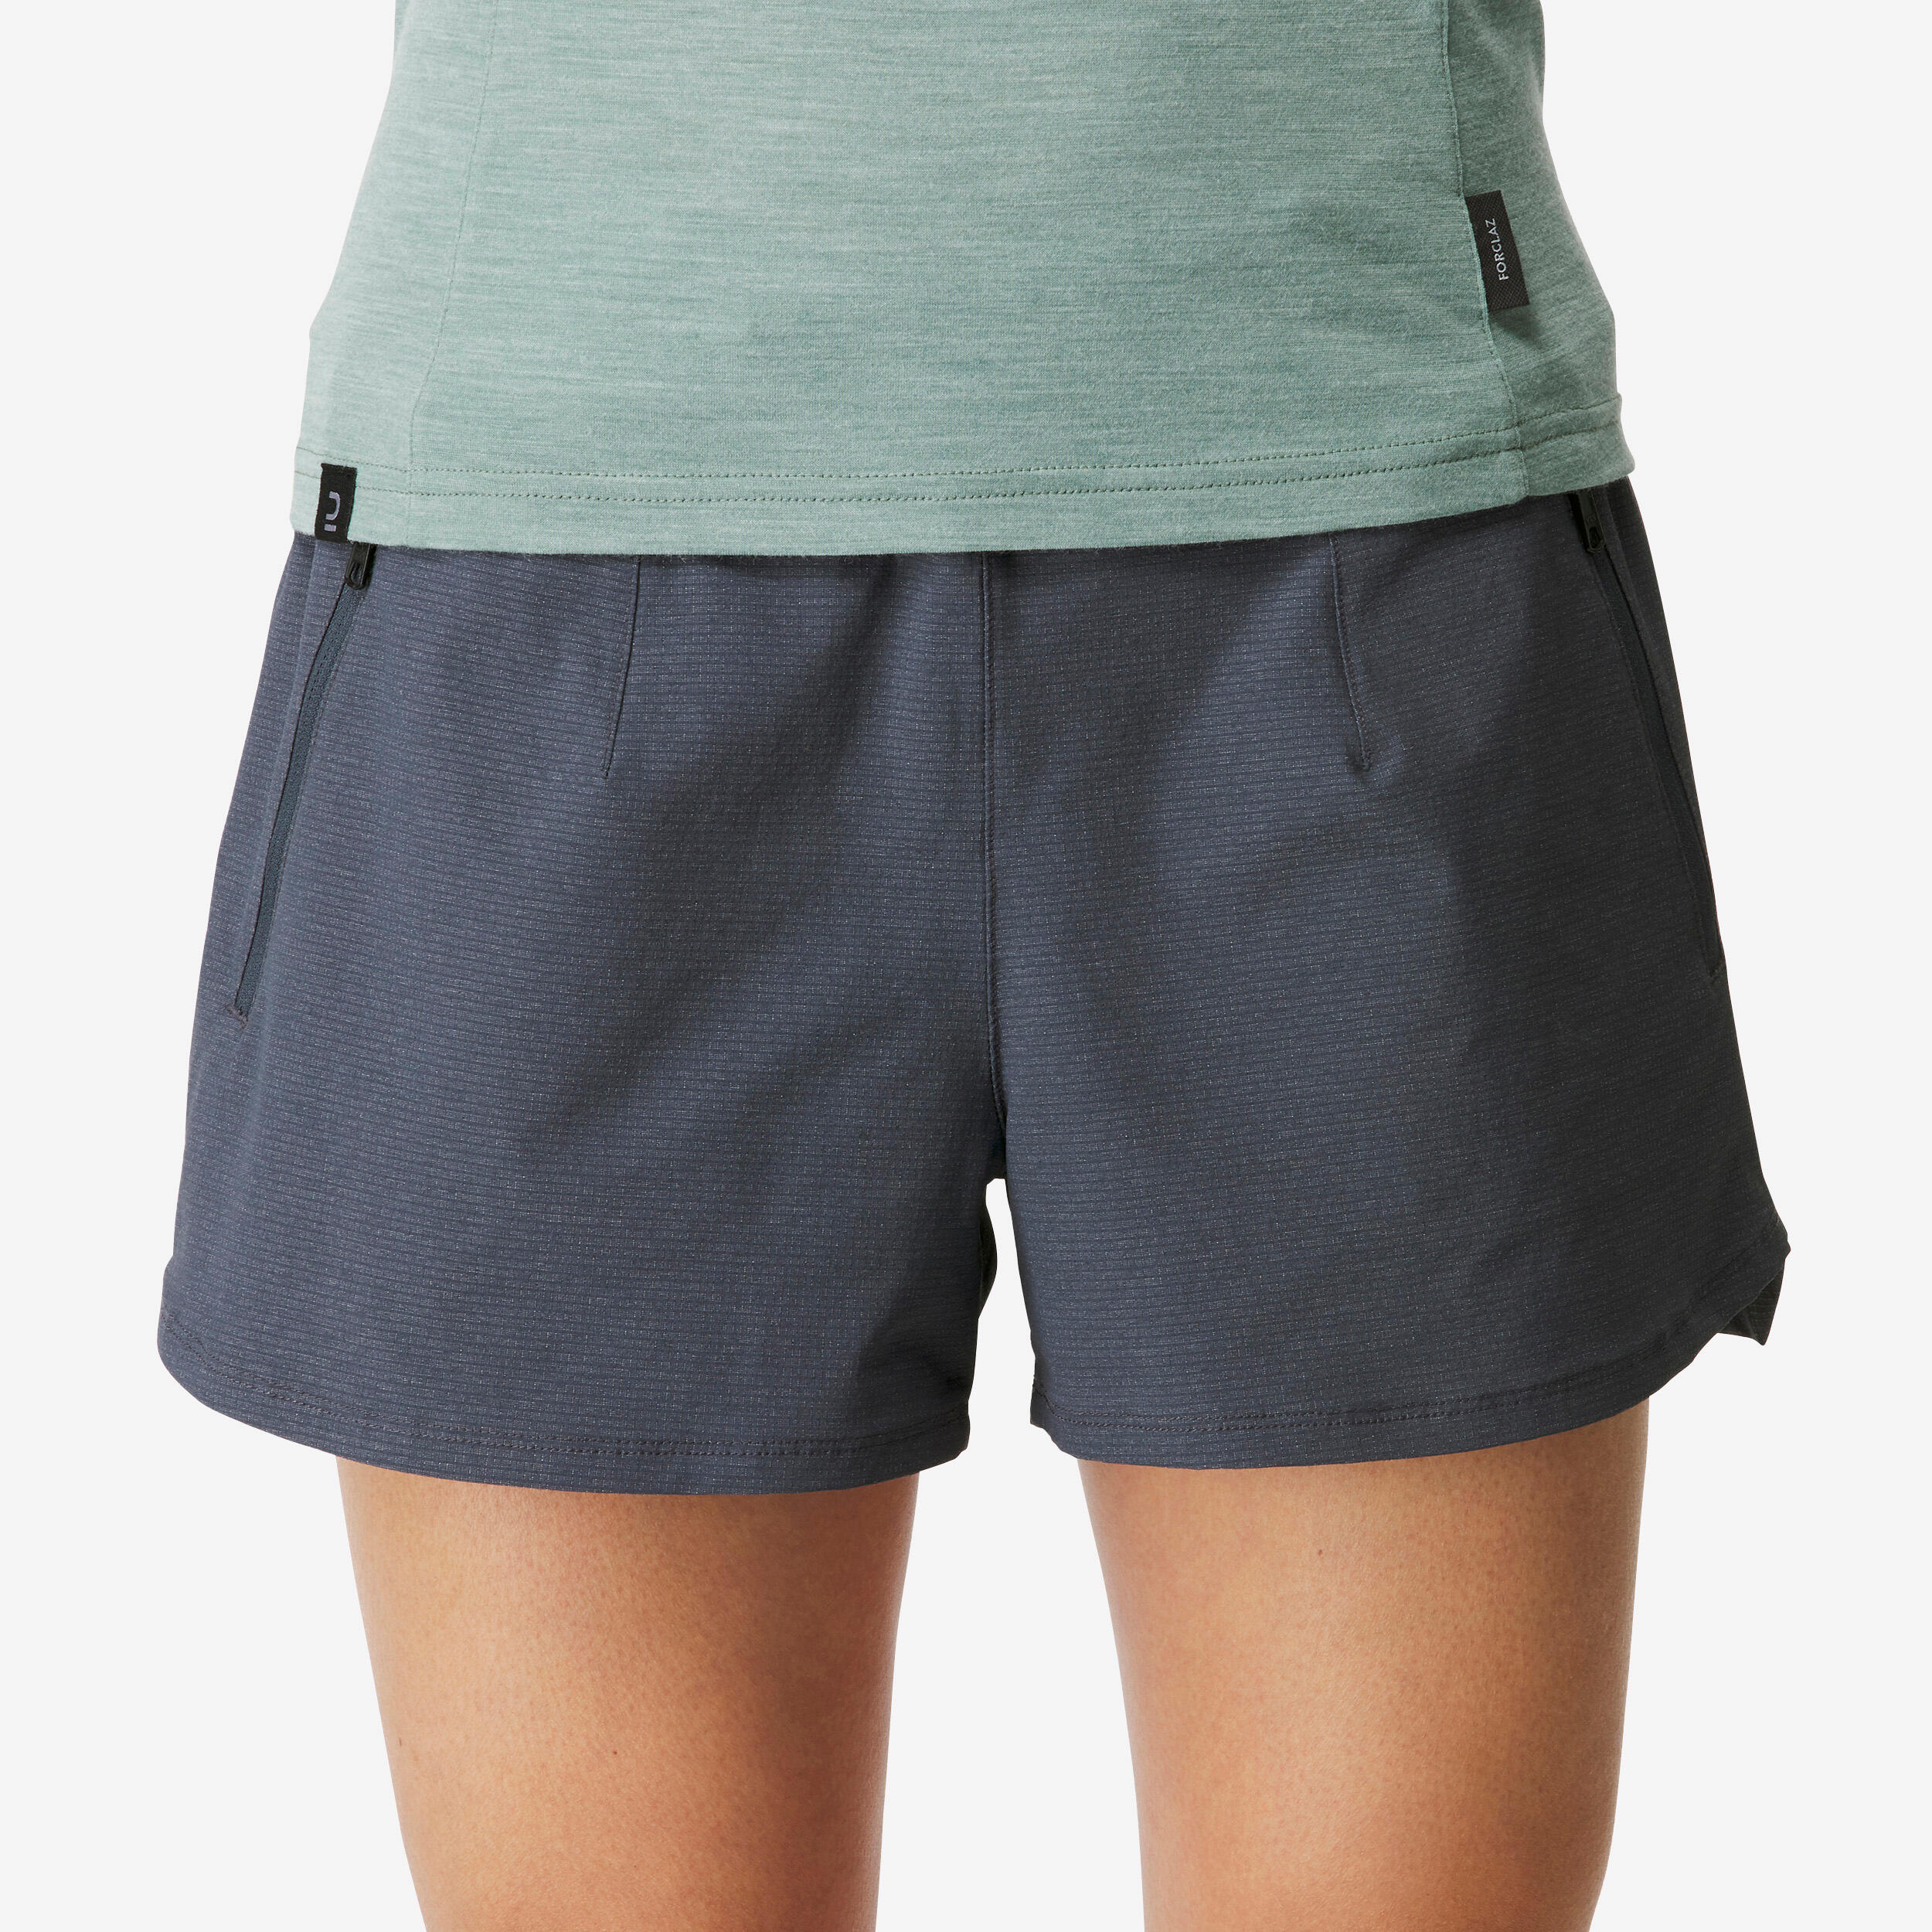 FORCLAZ Women's Trekking Short Shorts-TRAVEL 900-Blue